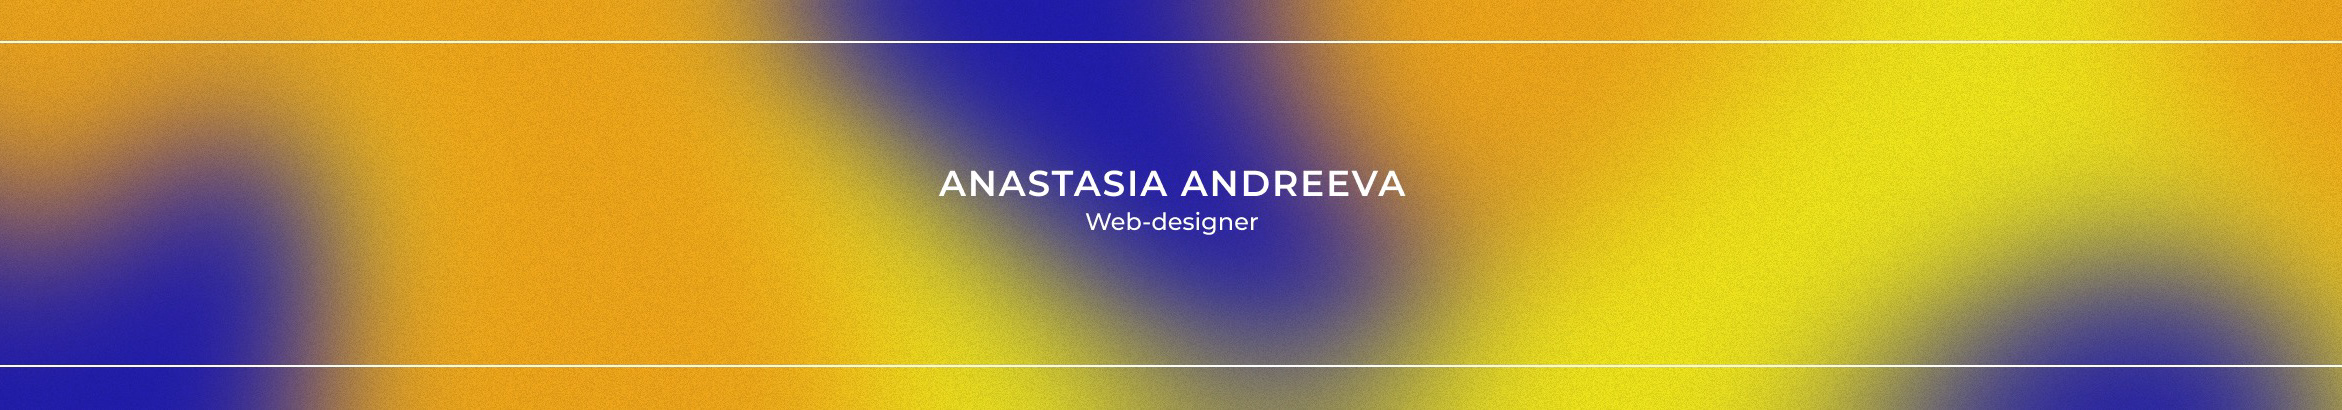 Profielbanner van Anastasia Andreeva